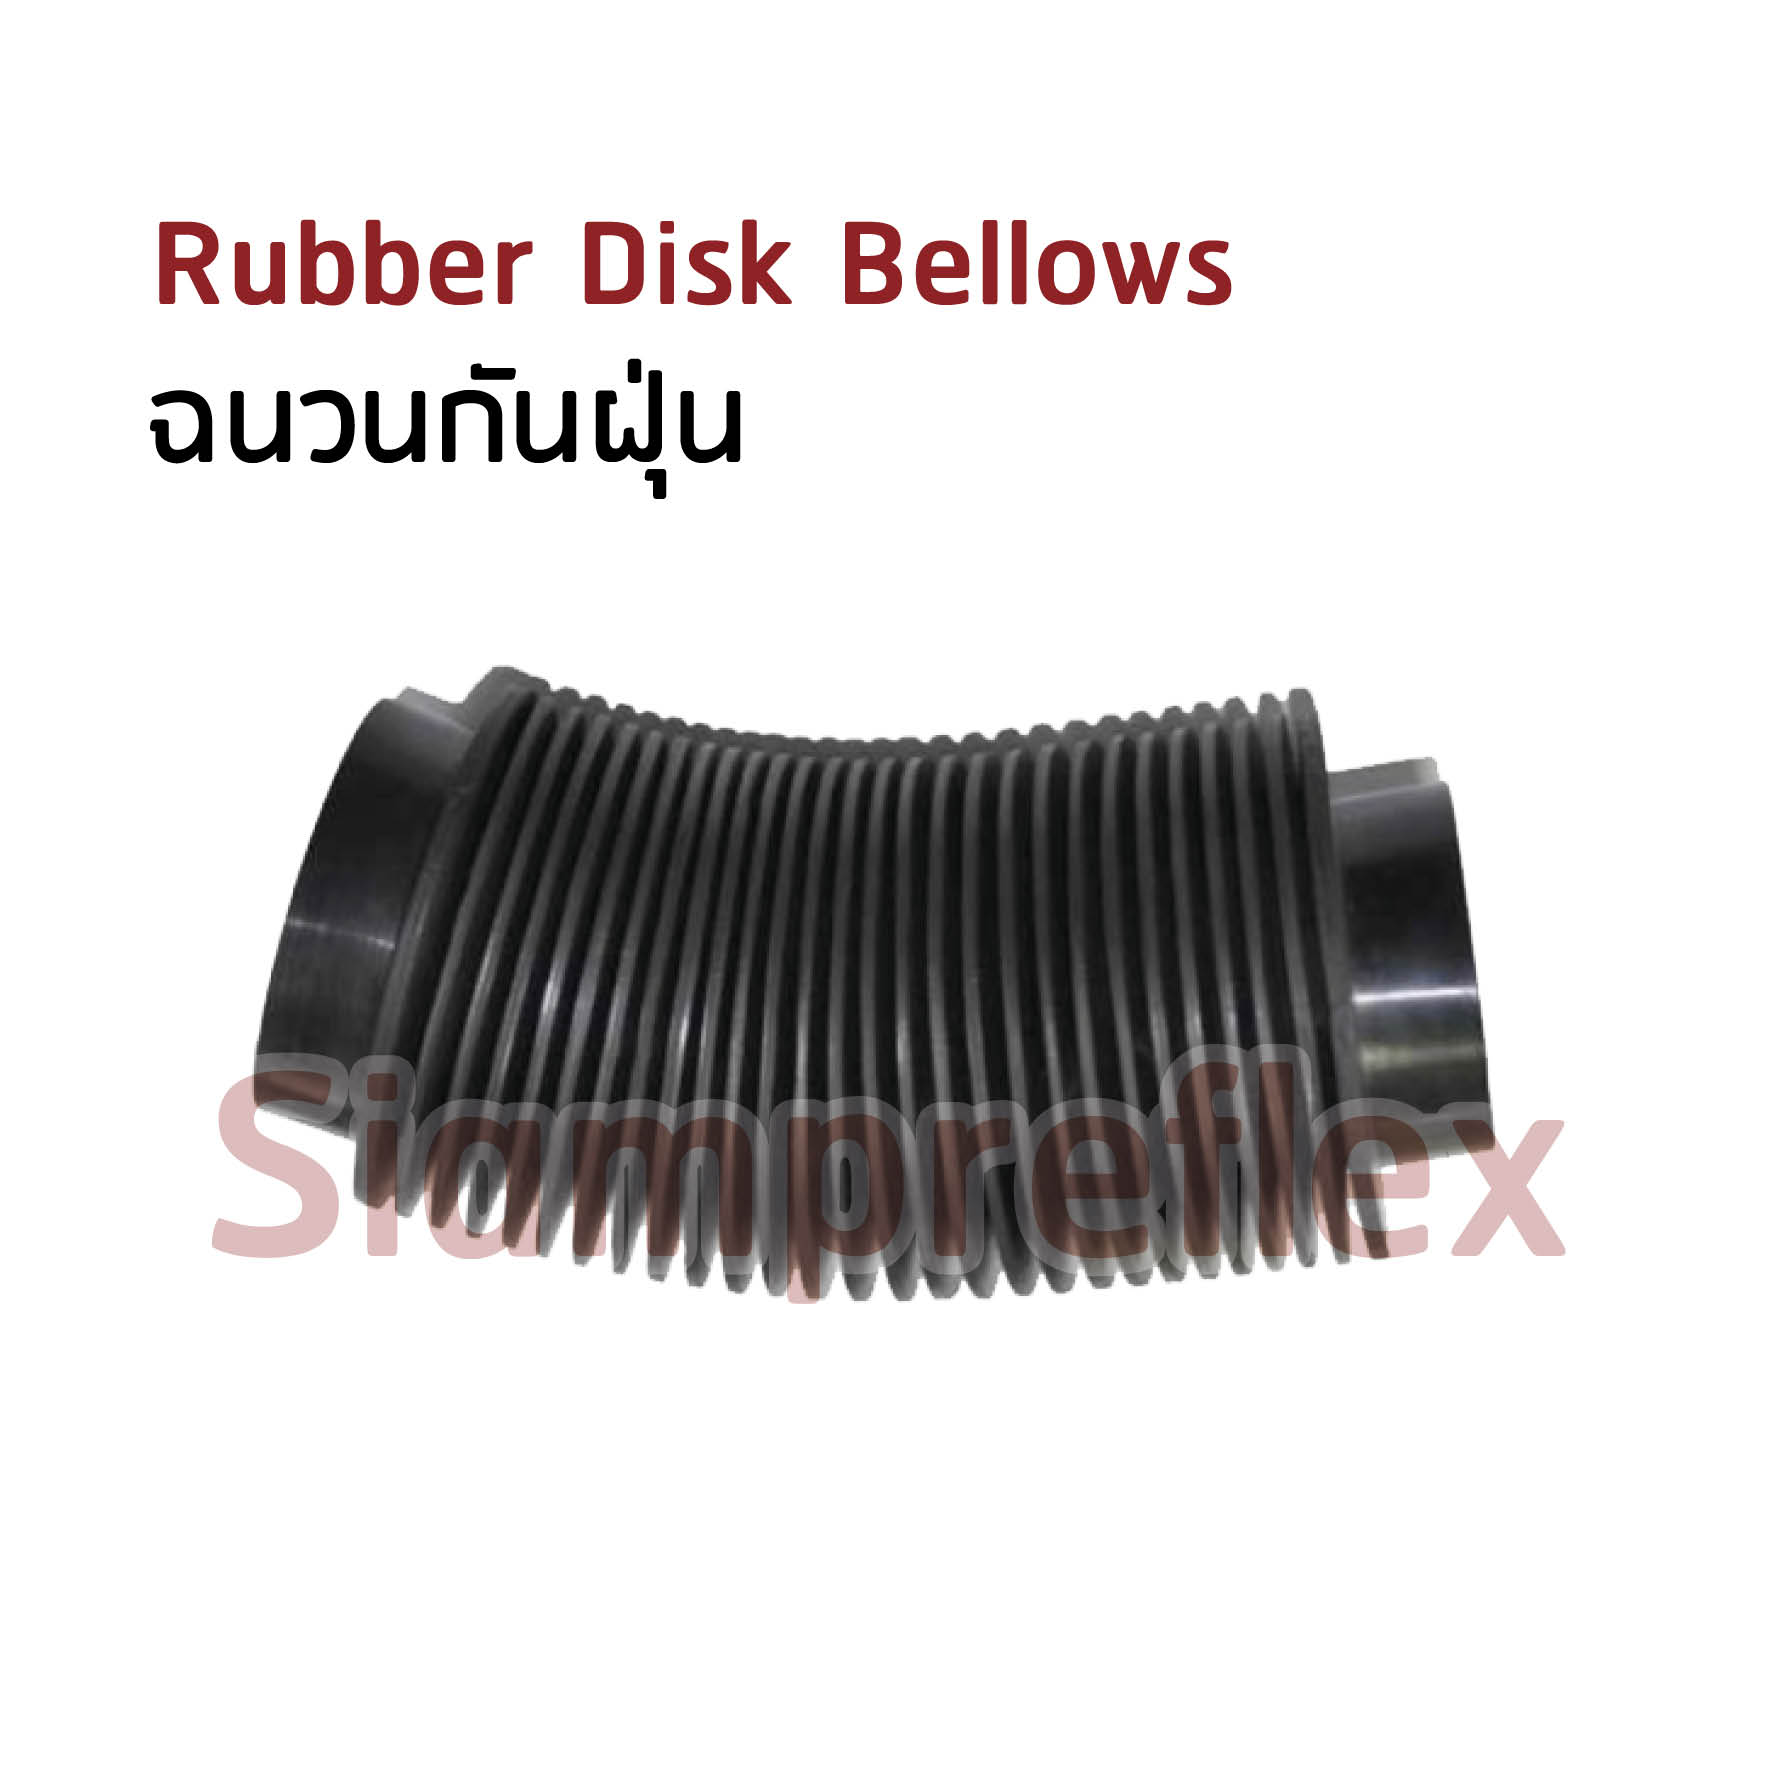 Rubber Disk Bellows ฉนวนกันฝุ่น